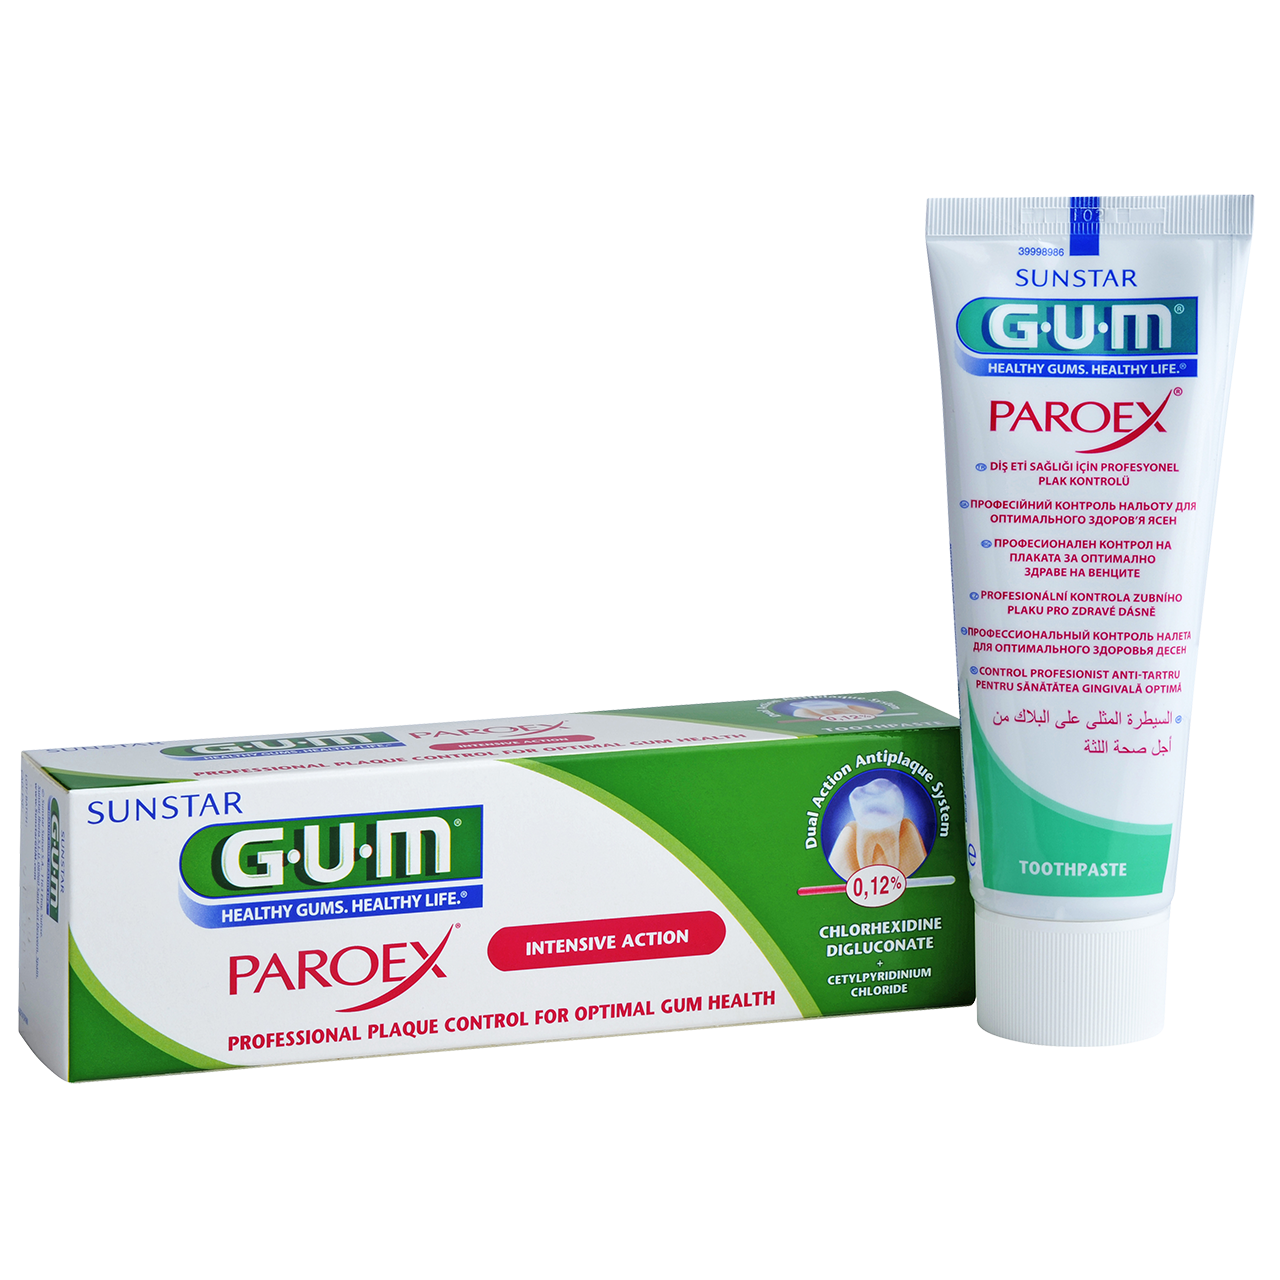 P1790_BDU2_GUM Paroex toothpaste 0.12_box_tube_EN